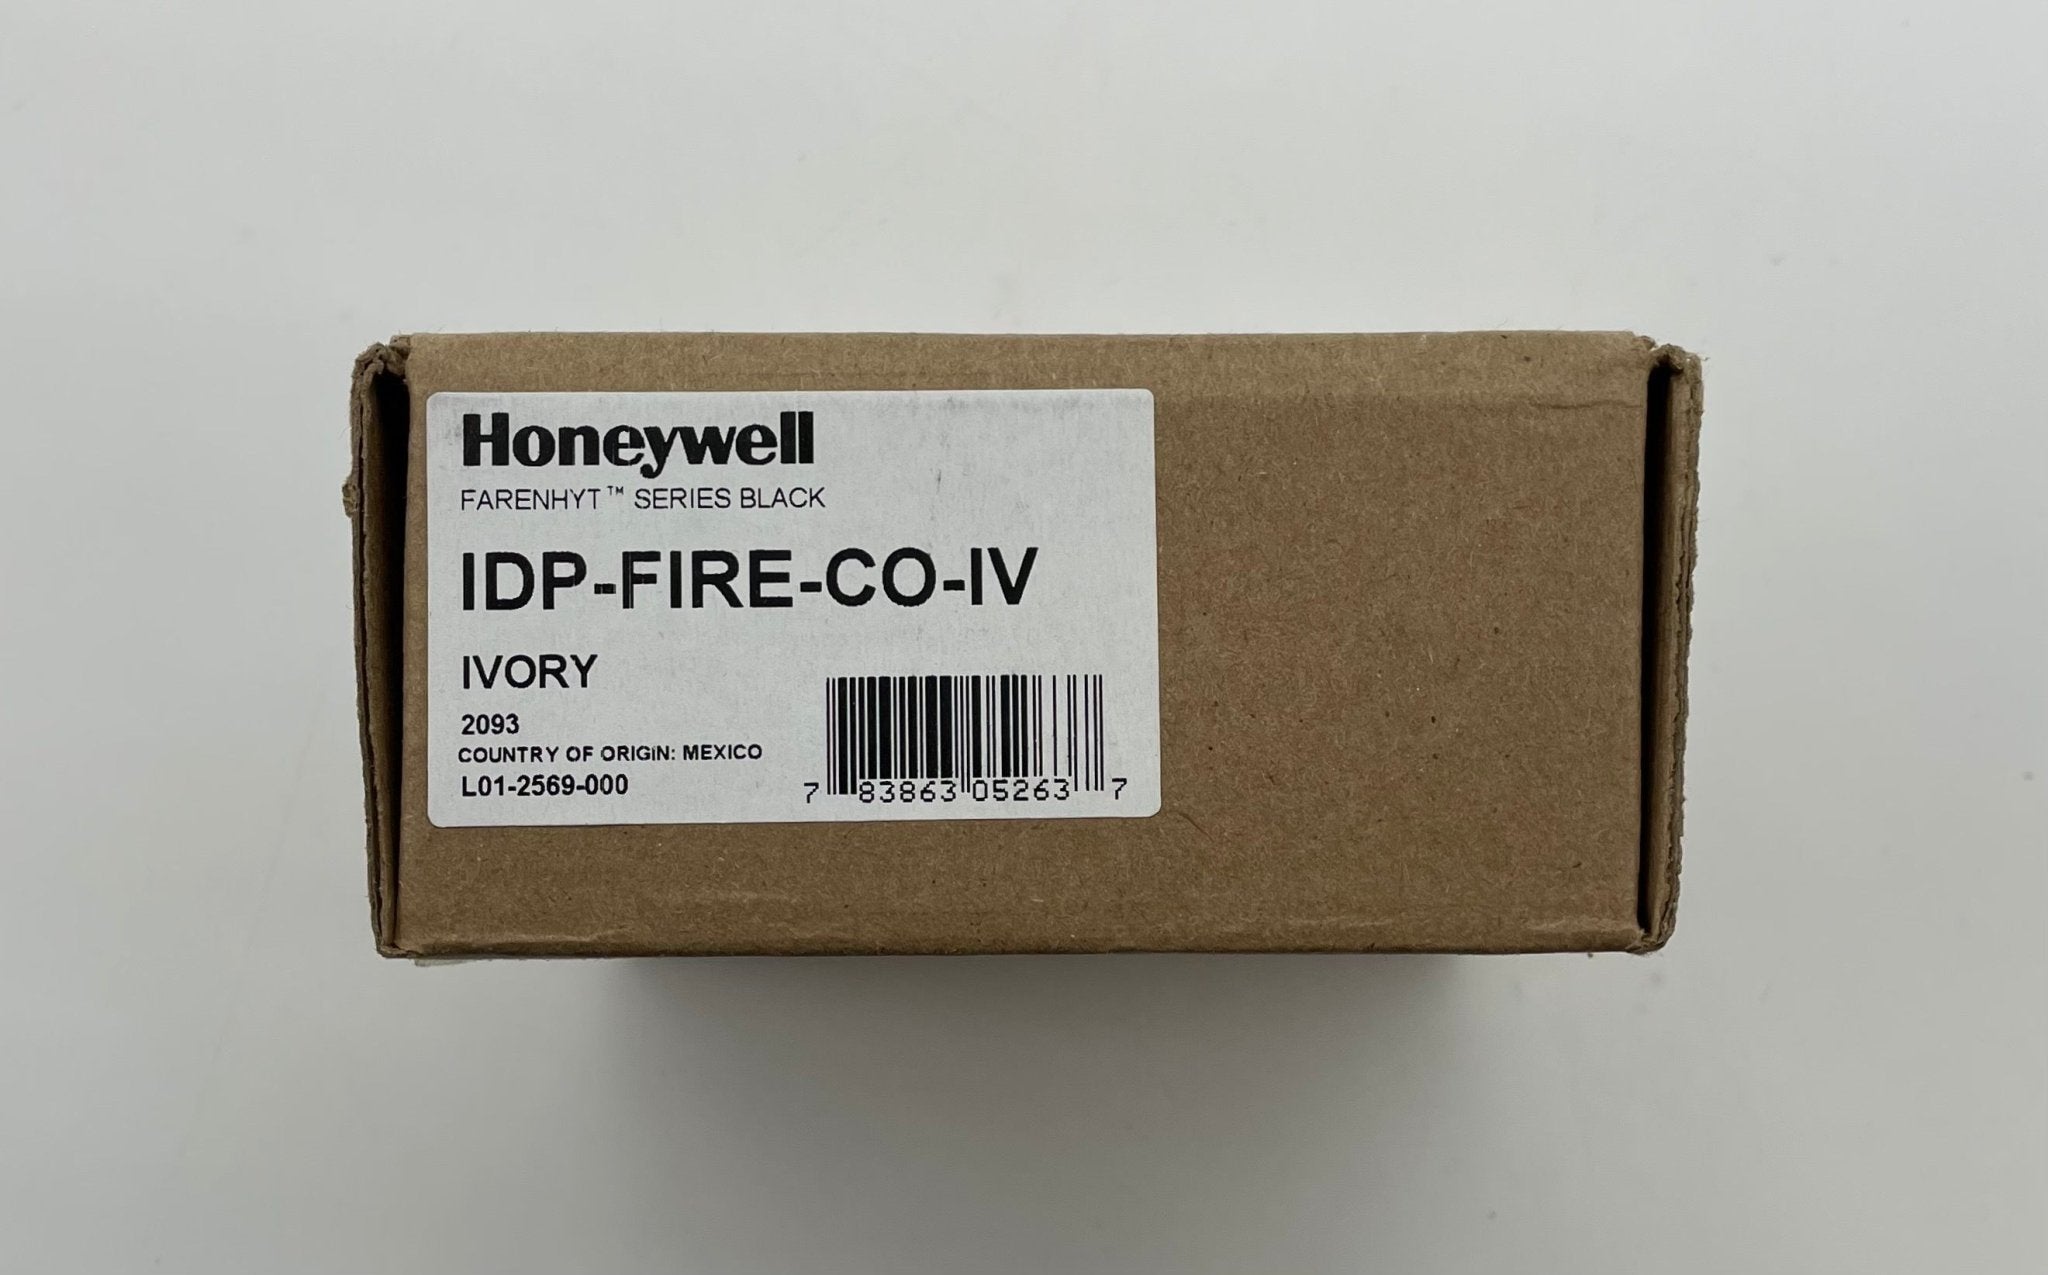 Farenhyt IDP-FIRE-CO-IV - The Fire Alarm Supplier